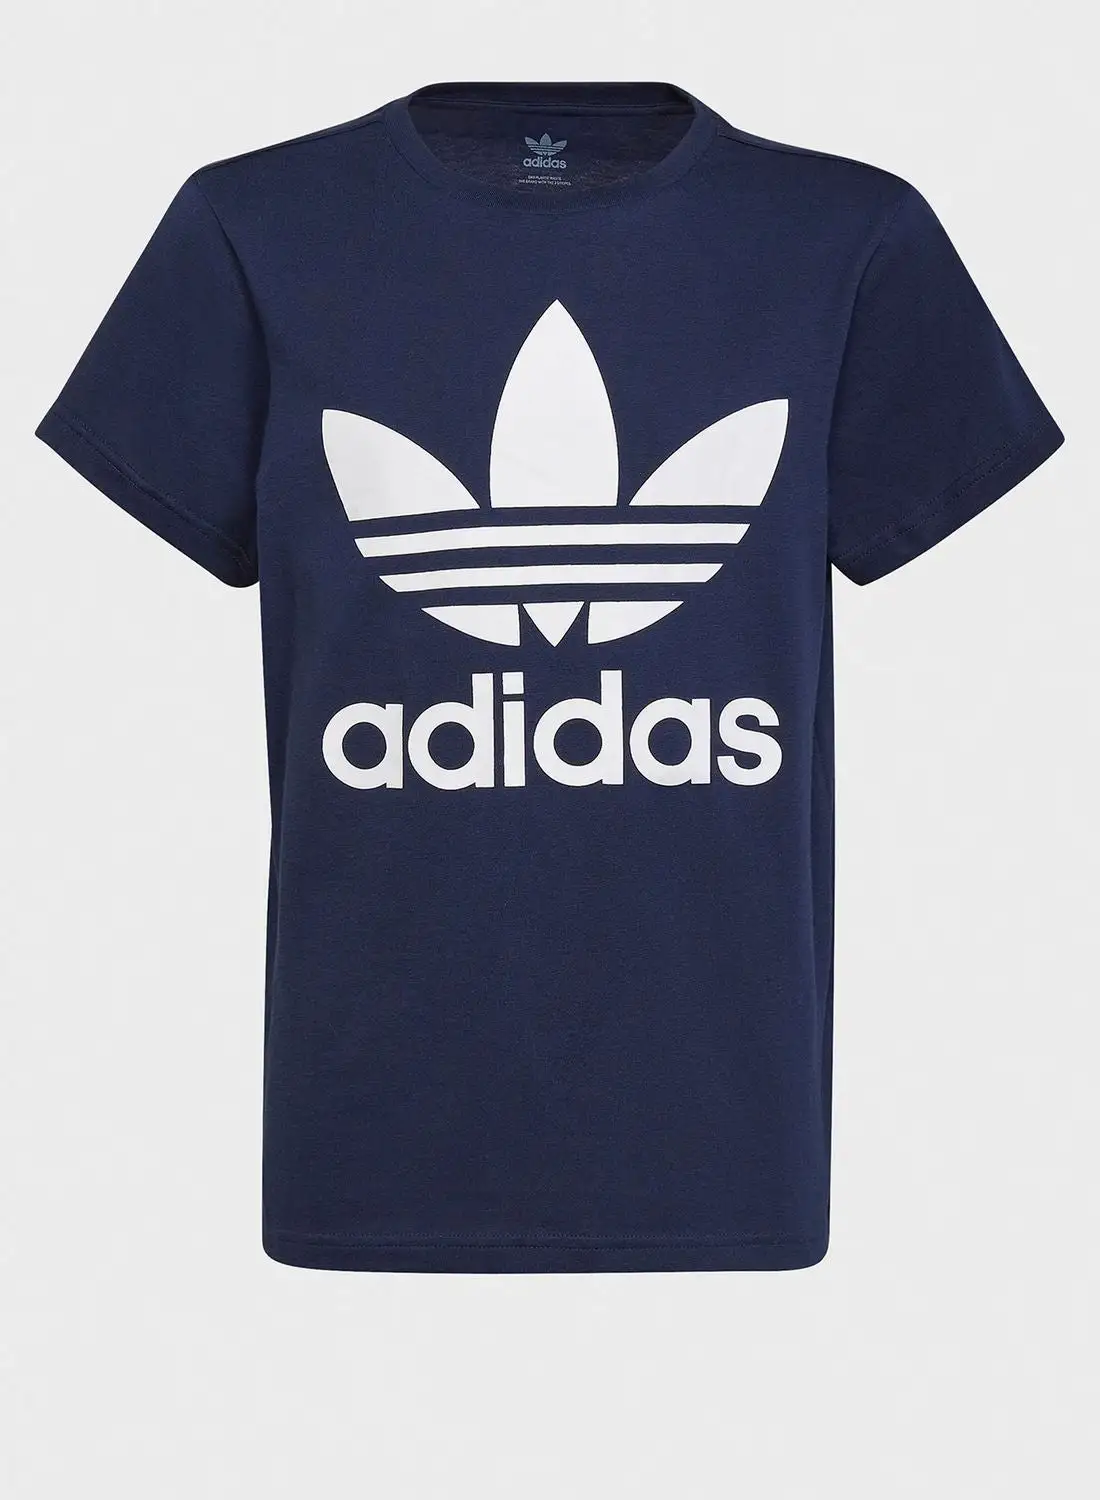 adidas Originals Youth Trefoil T-Shirt